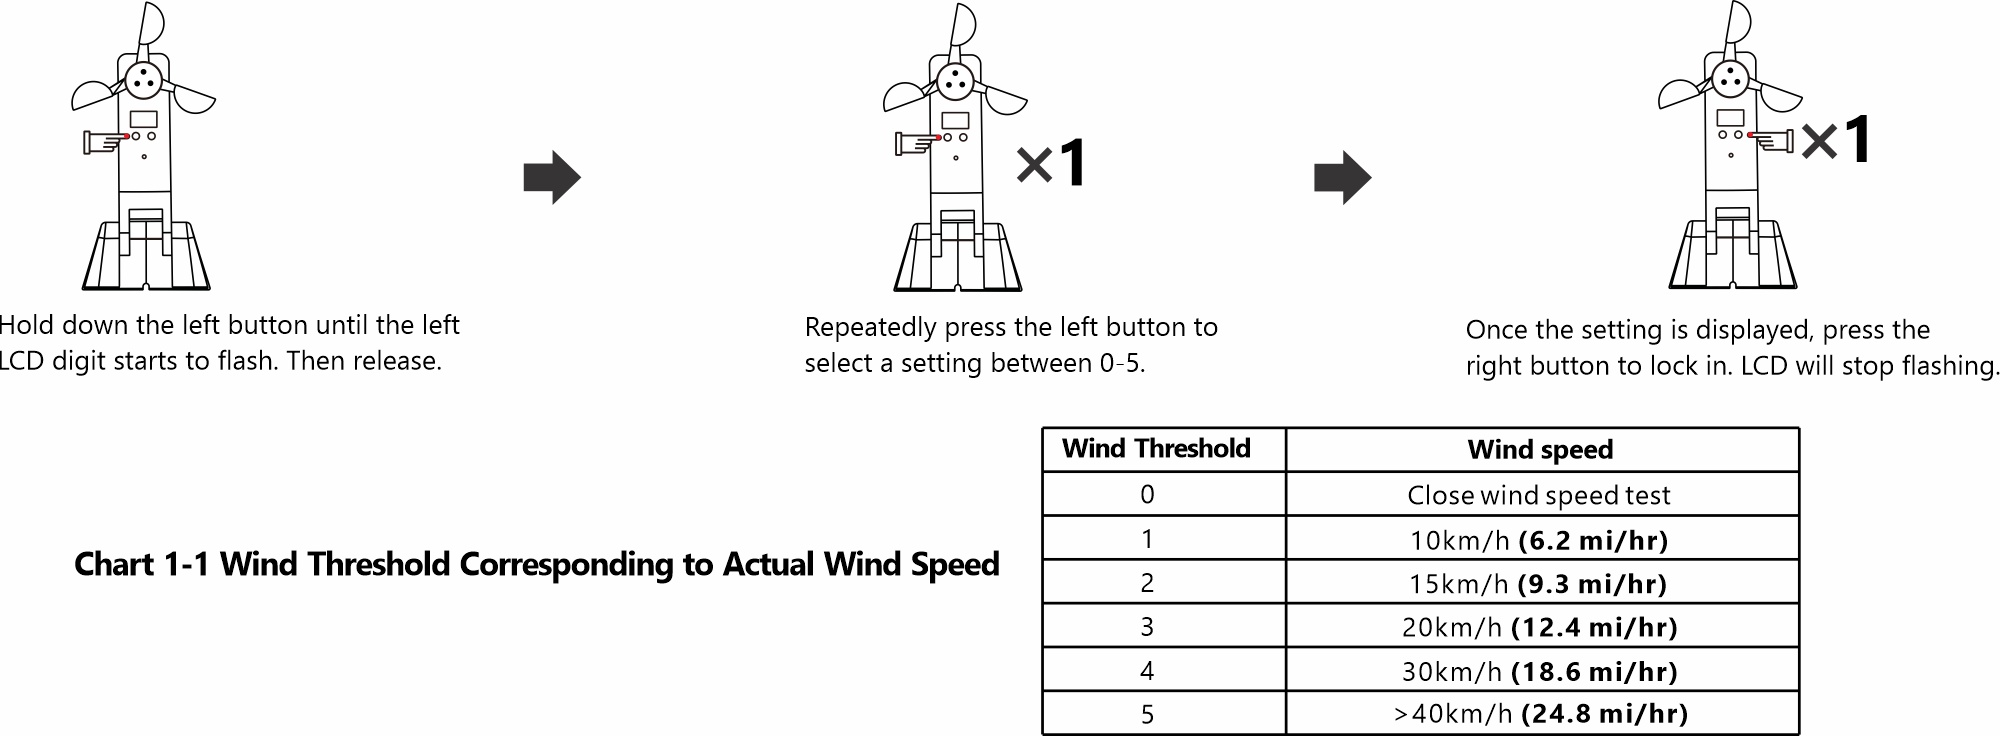 rs001-wind-threshold